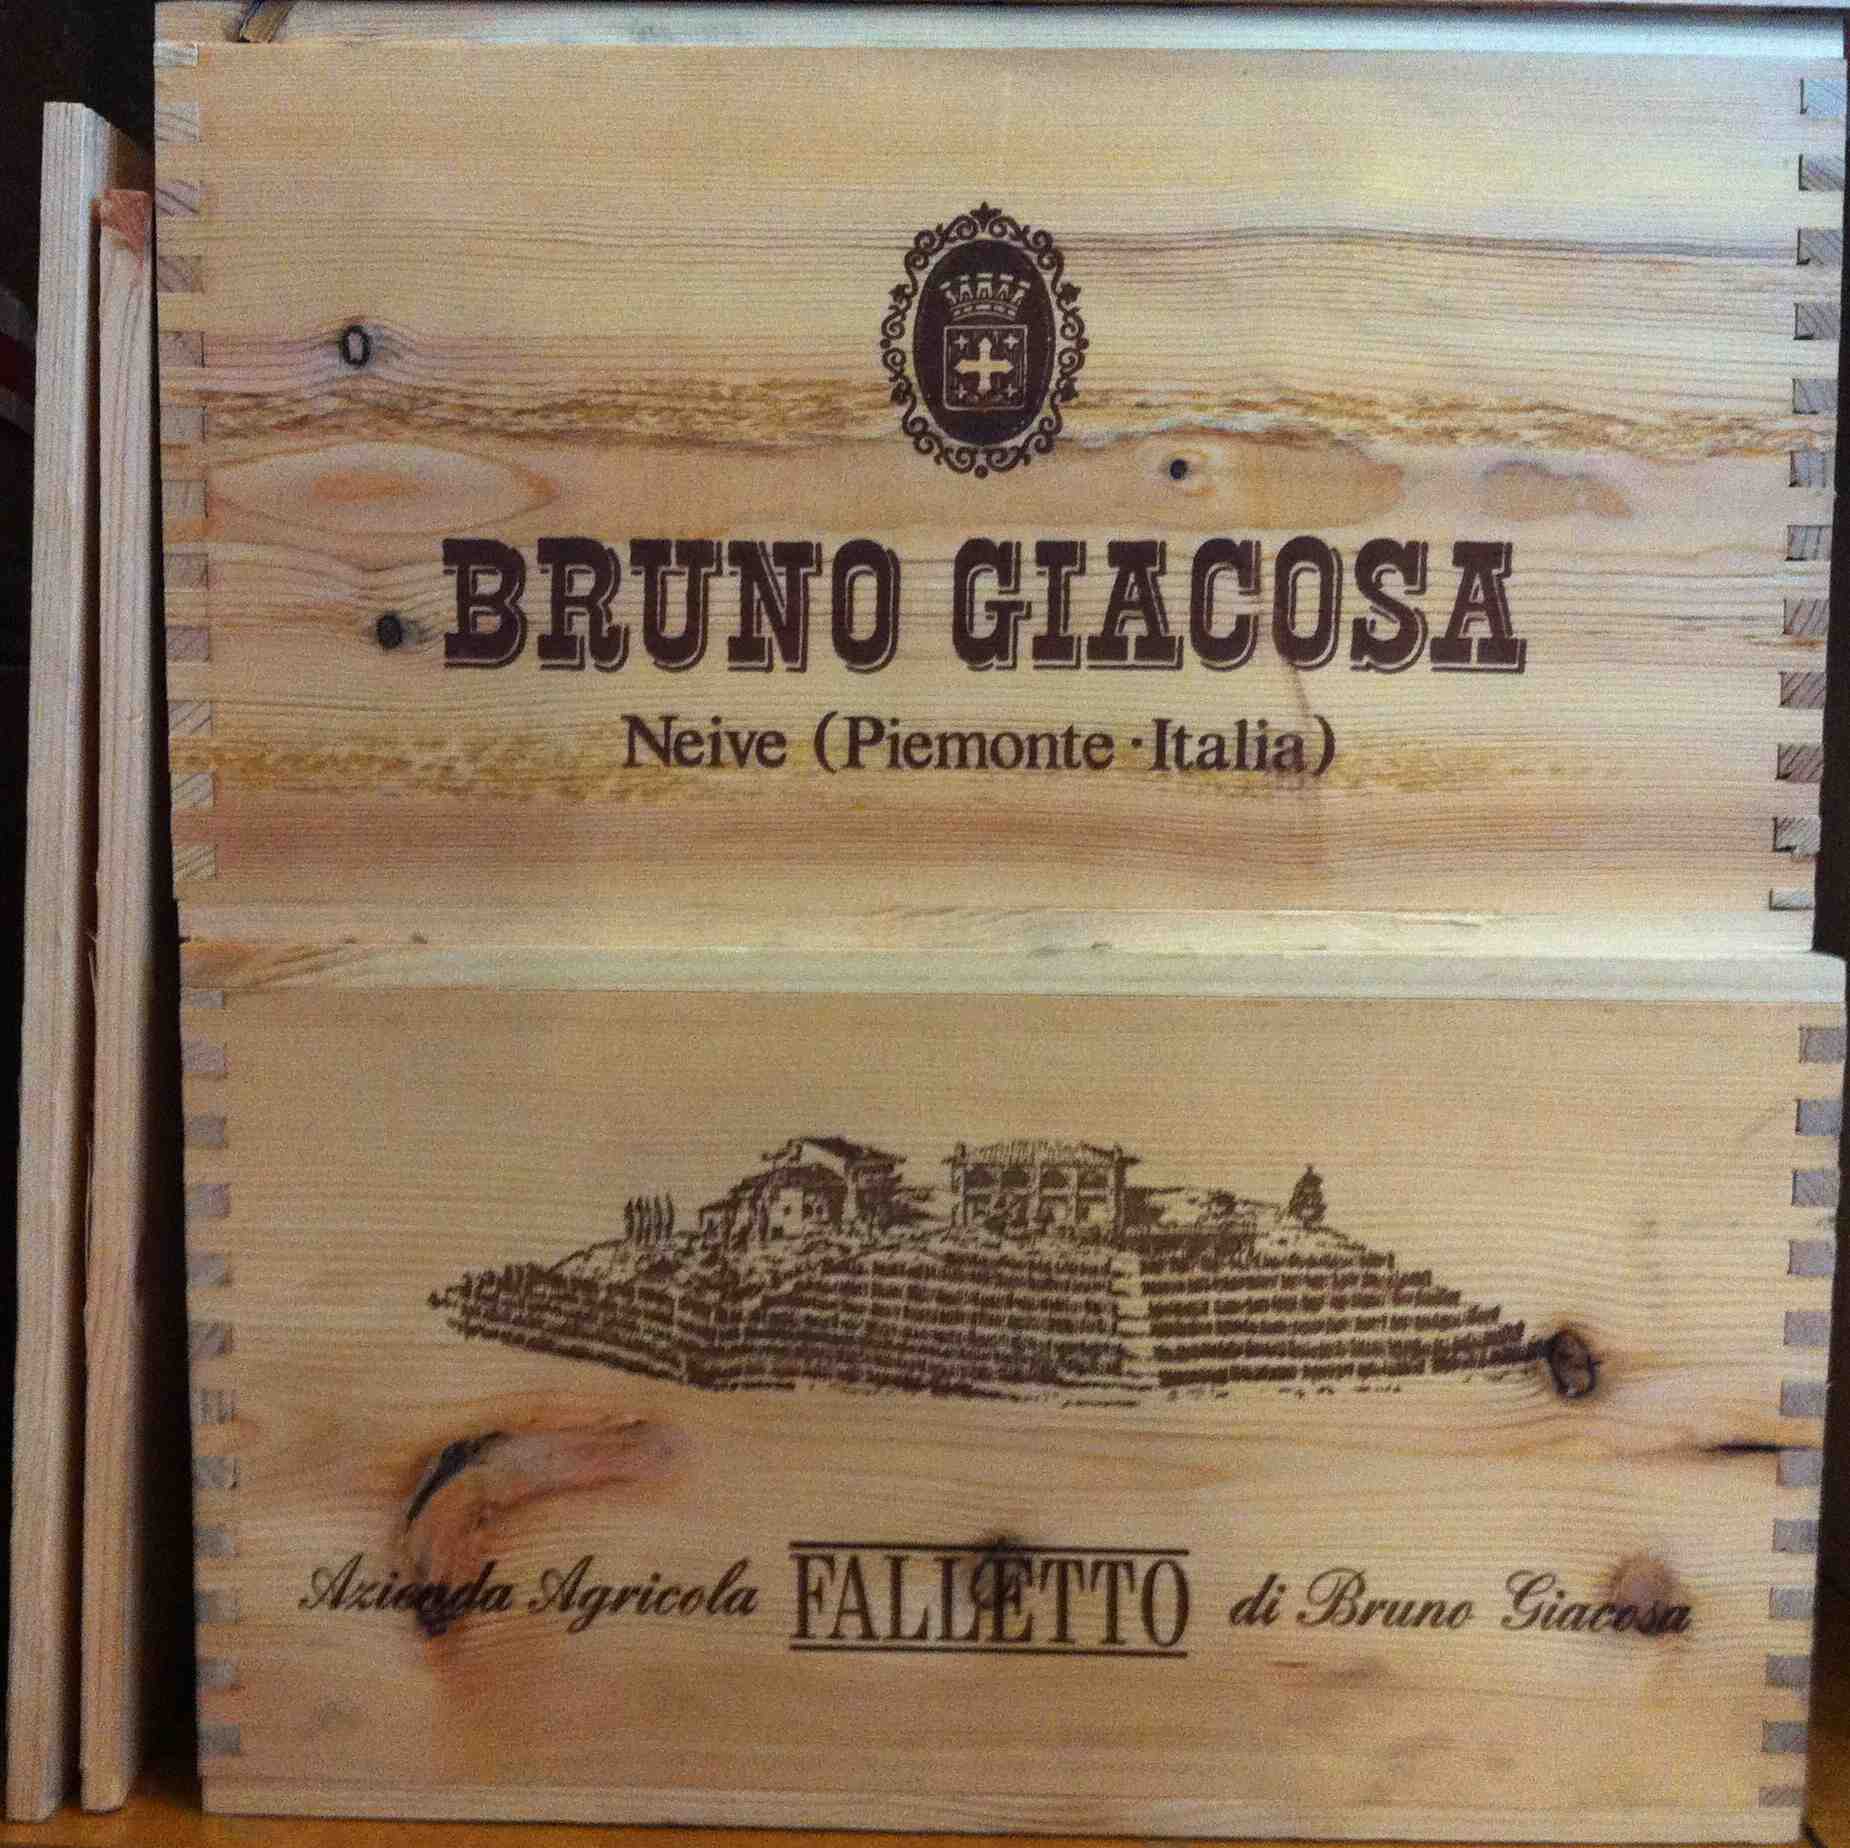 Bruno Giacosa: An Italian icon